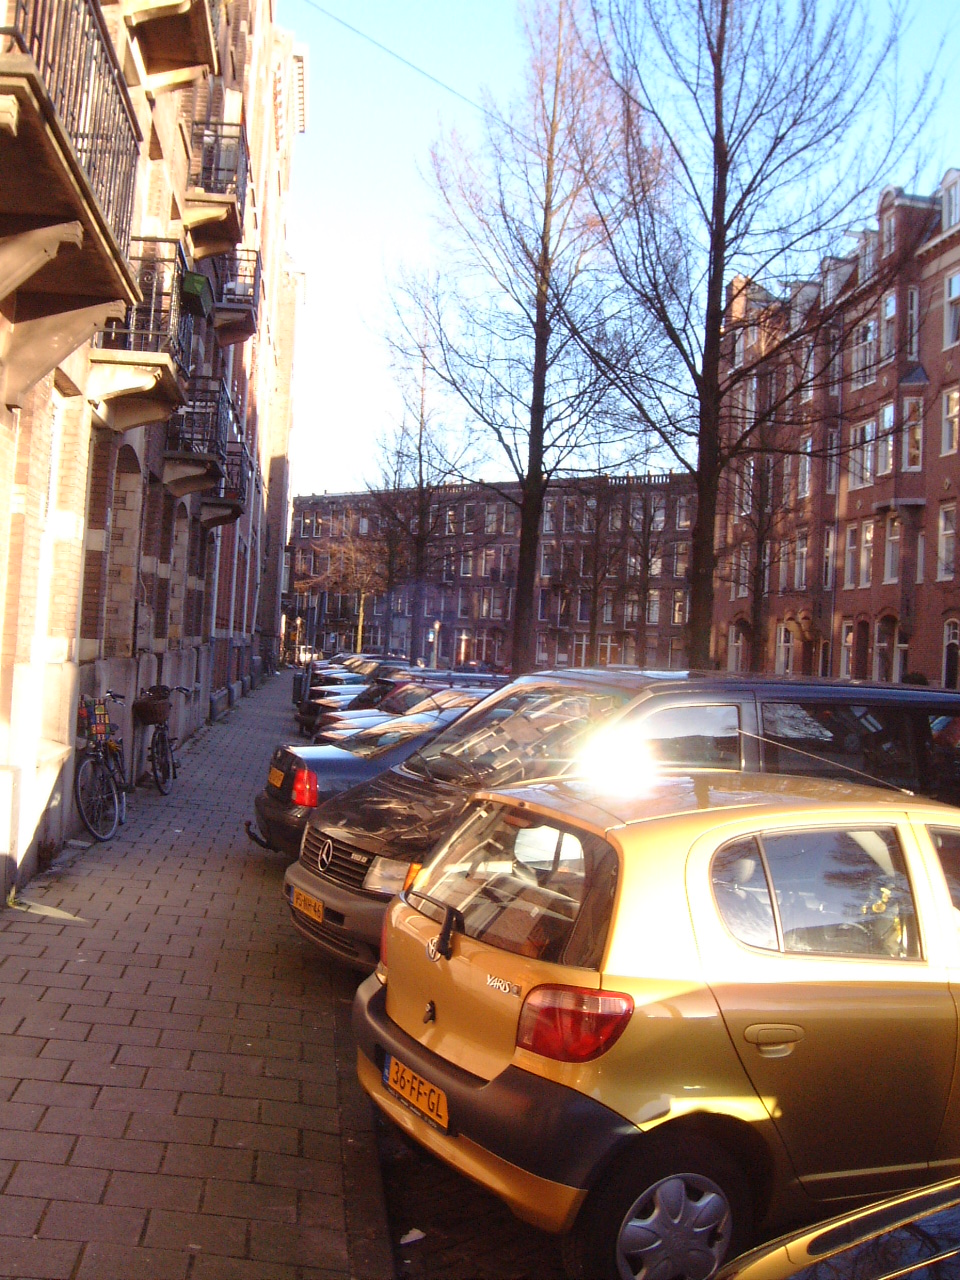 maartent street city parked cars gloss shiny houses sidewalk walkway pavement